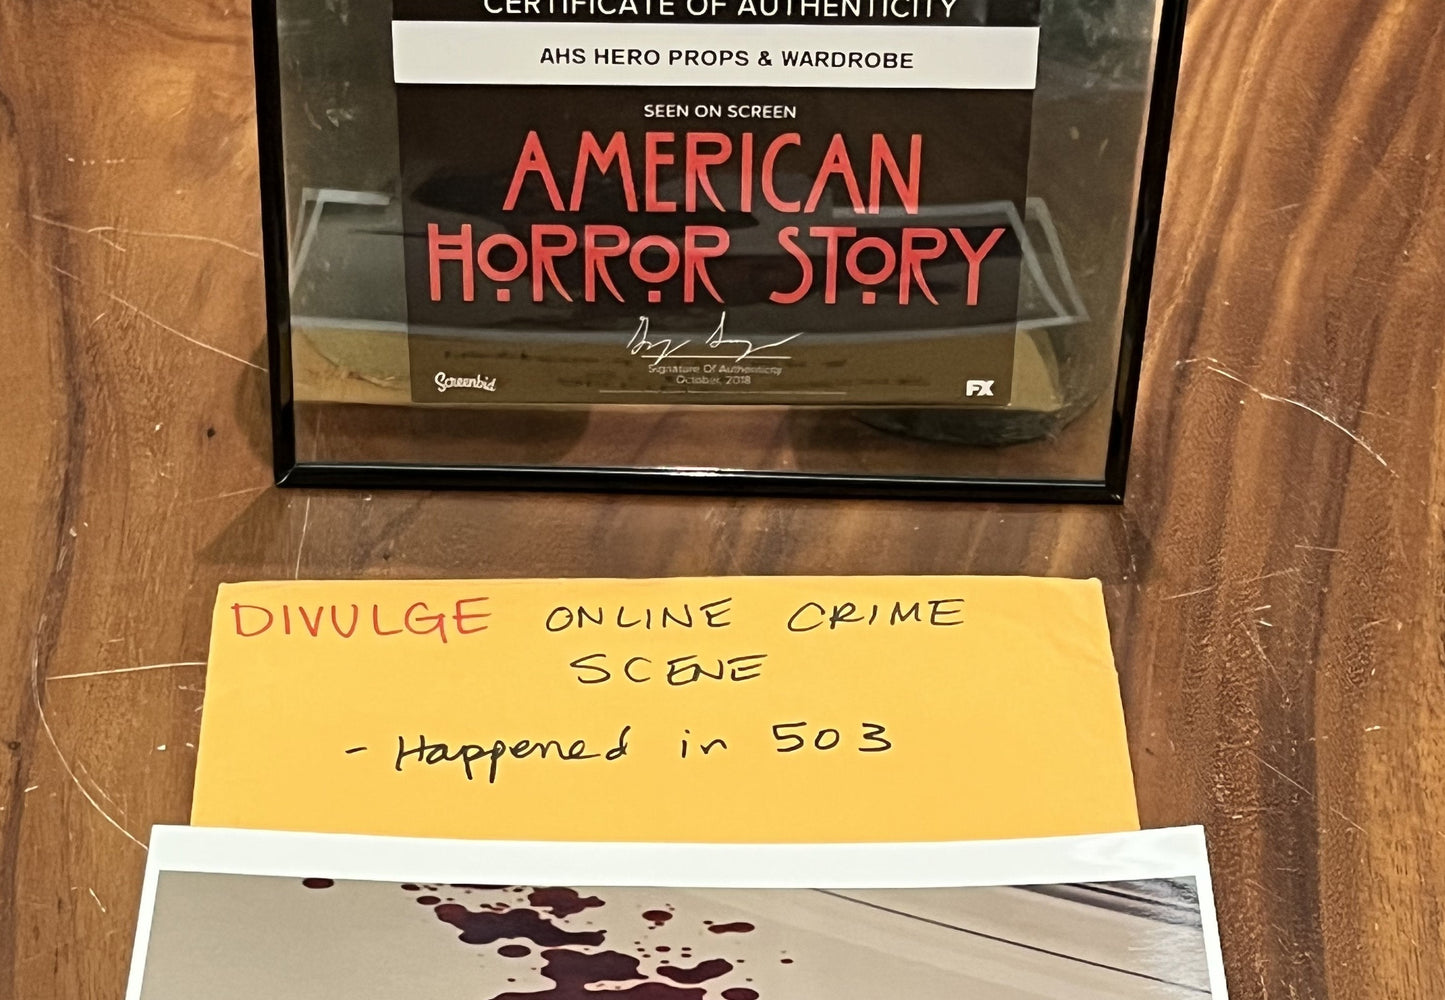 American Horror Story: Divulge Crime Scene Photos from Episode 503